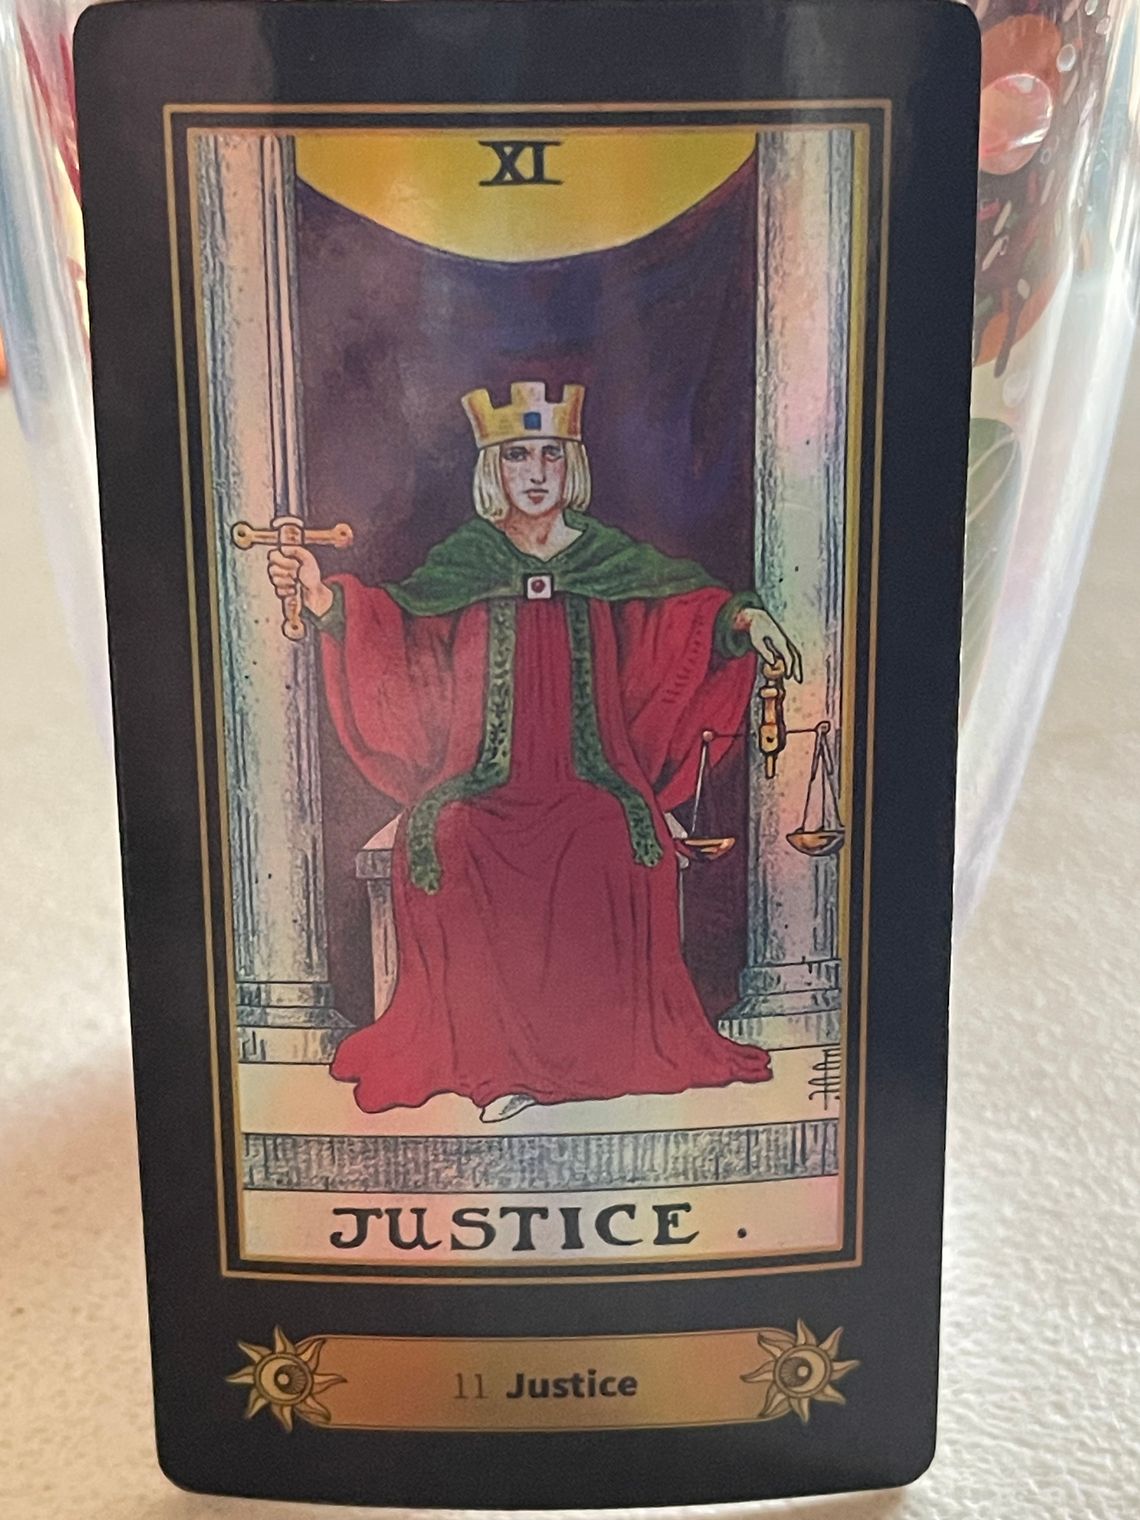 Justice XI